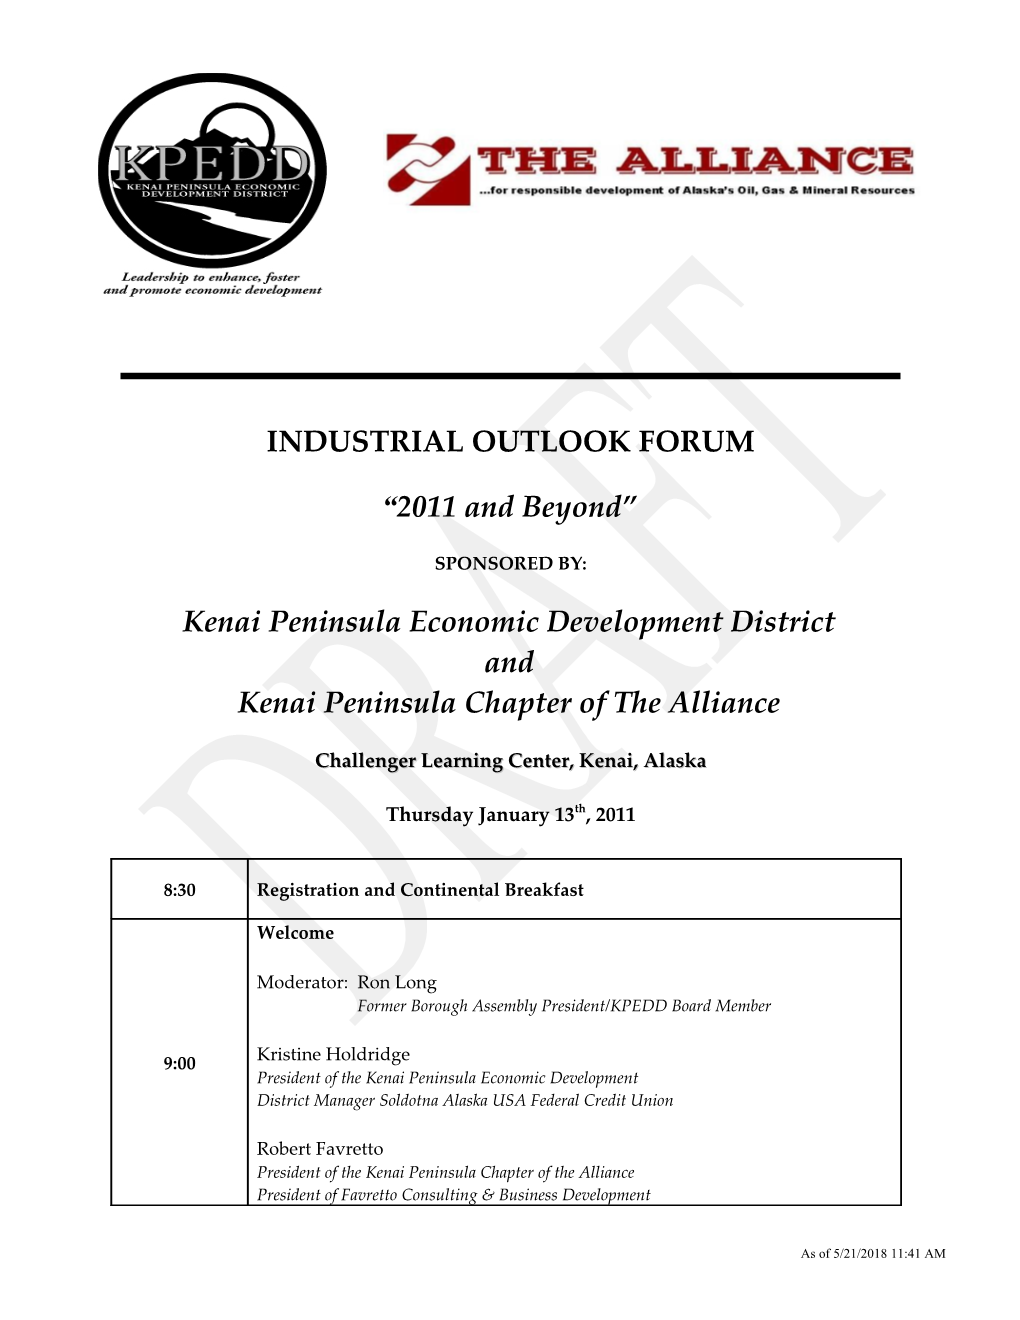 Kenai Peninsula Economic Development District